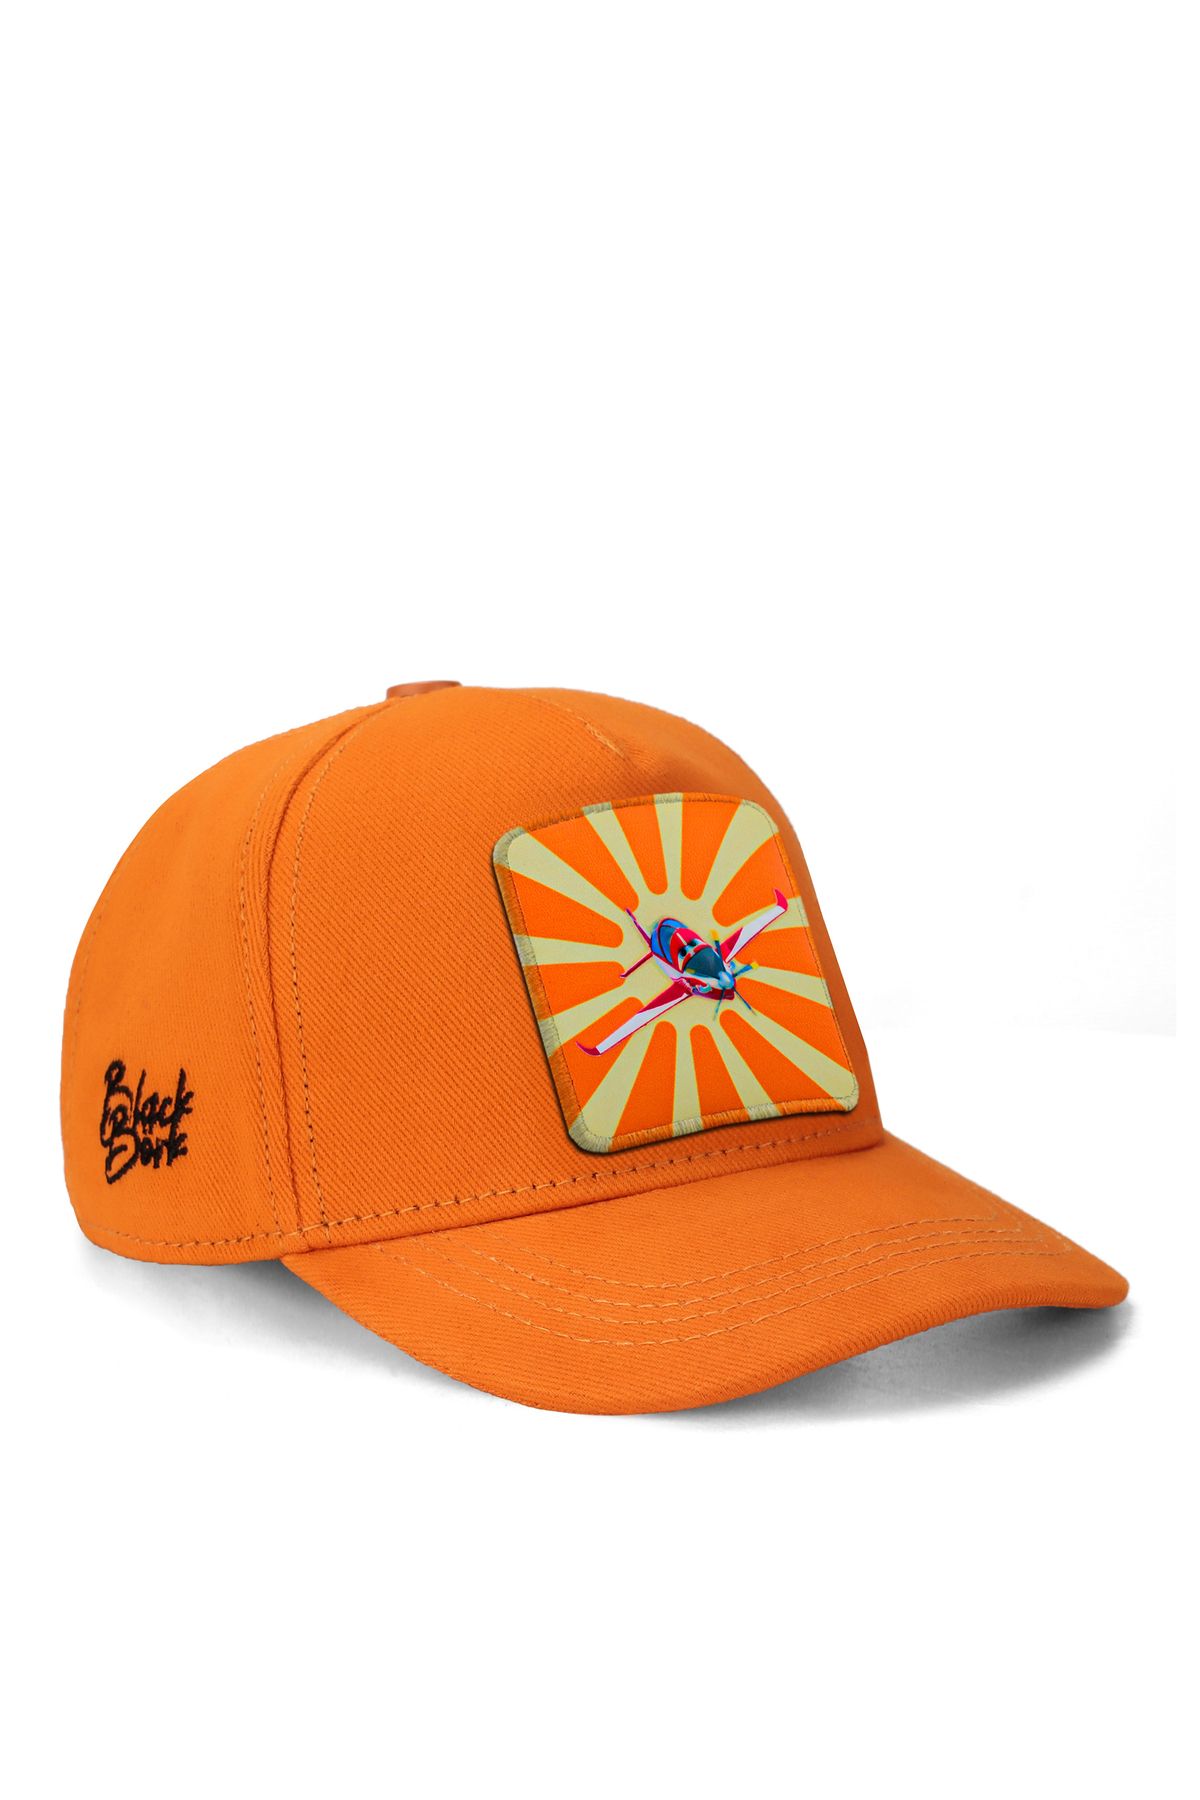 BlackBörk V1 Baseball Güneş Hürkuş Lisanlı Turuncu Çocuk Şapka